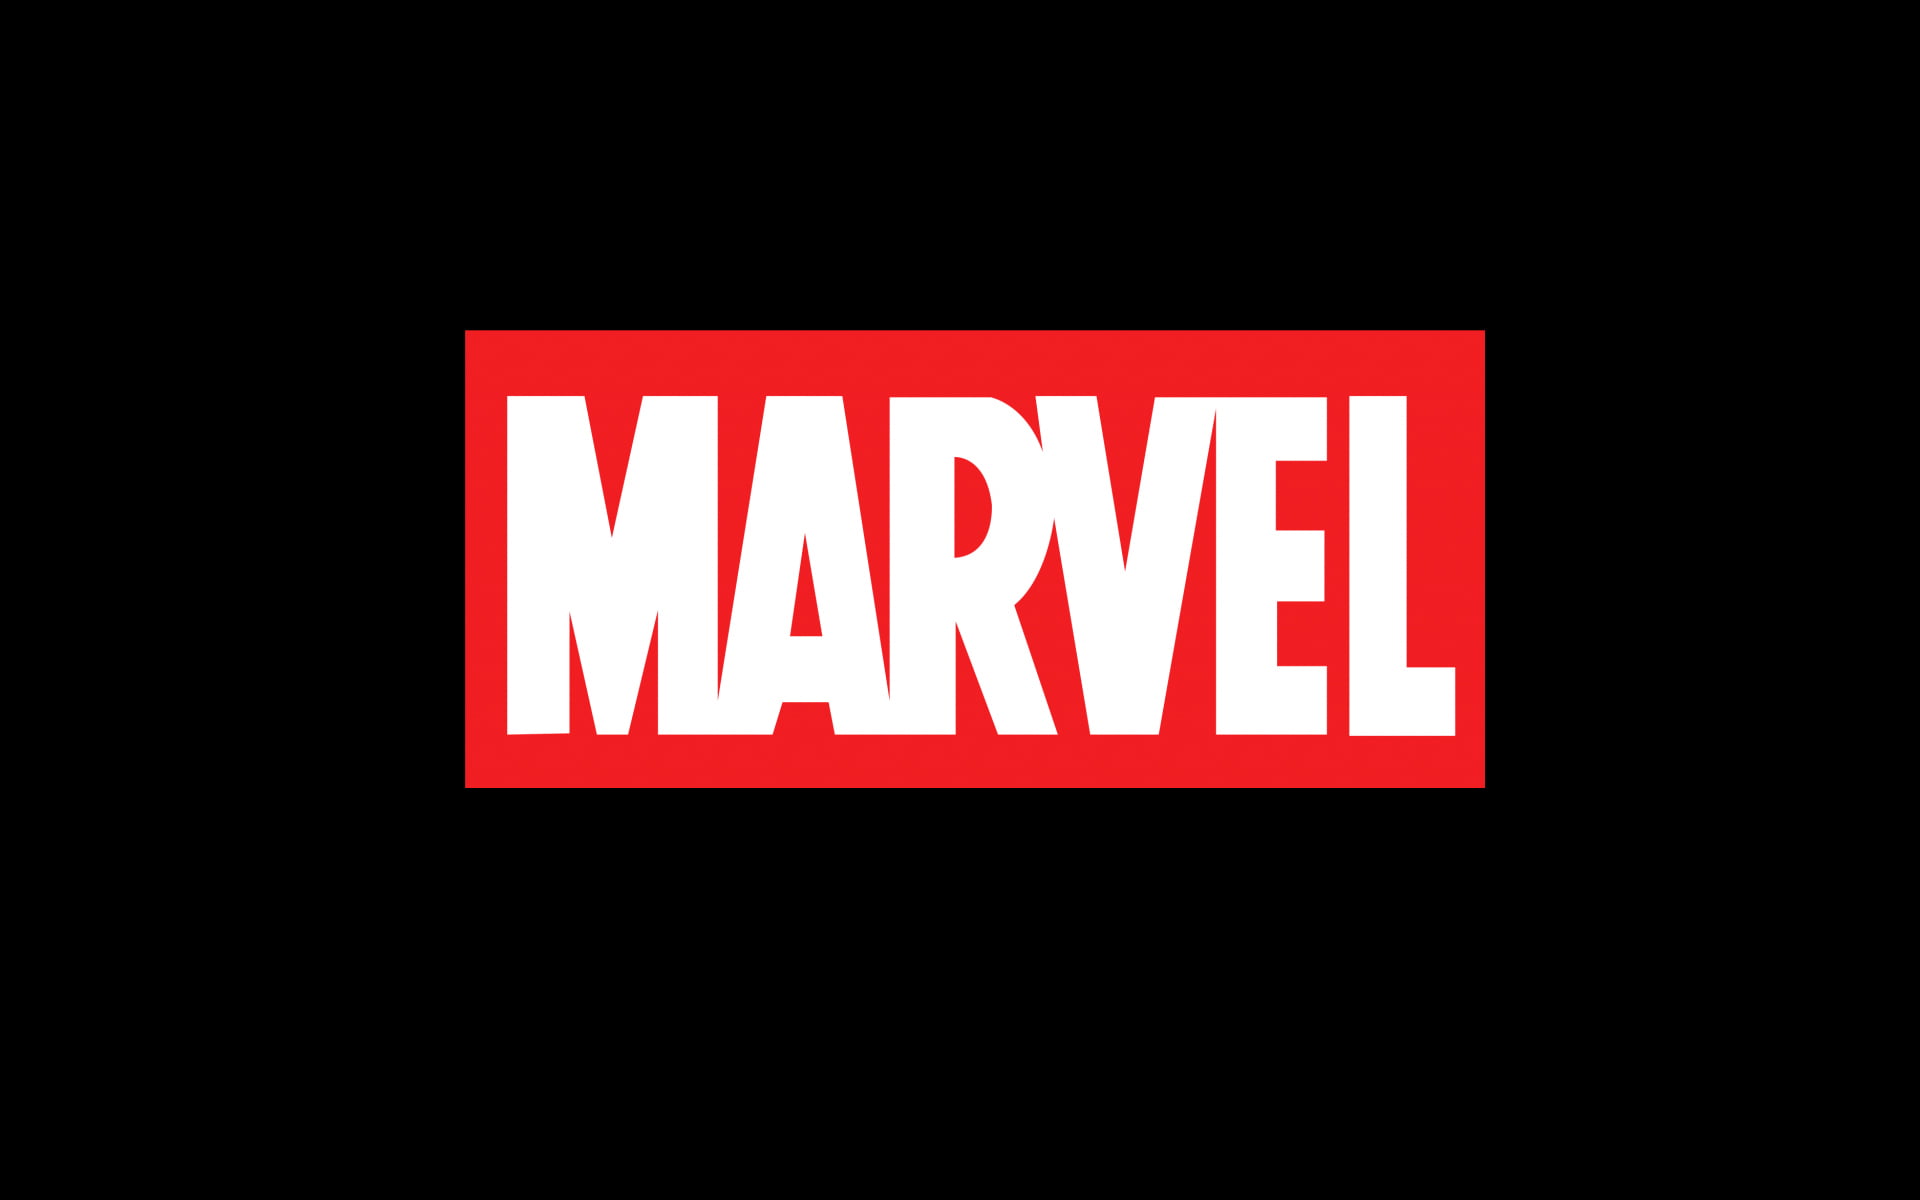 Marvel logo, minimalism, Studio, sign, red, business, illustration